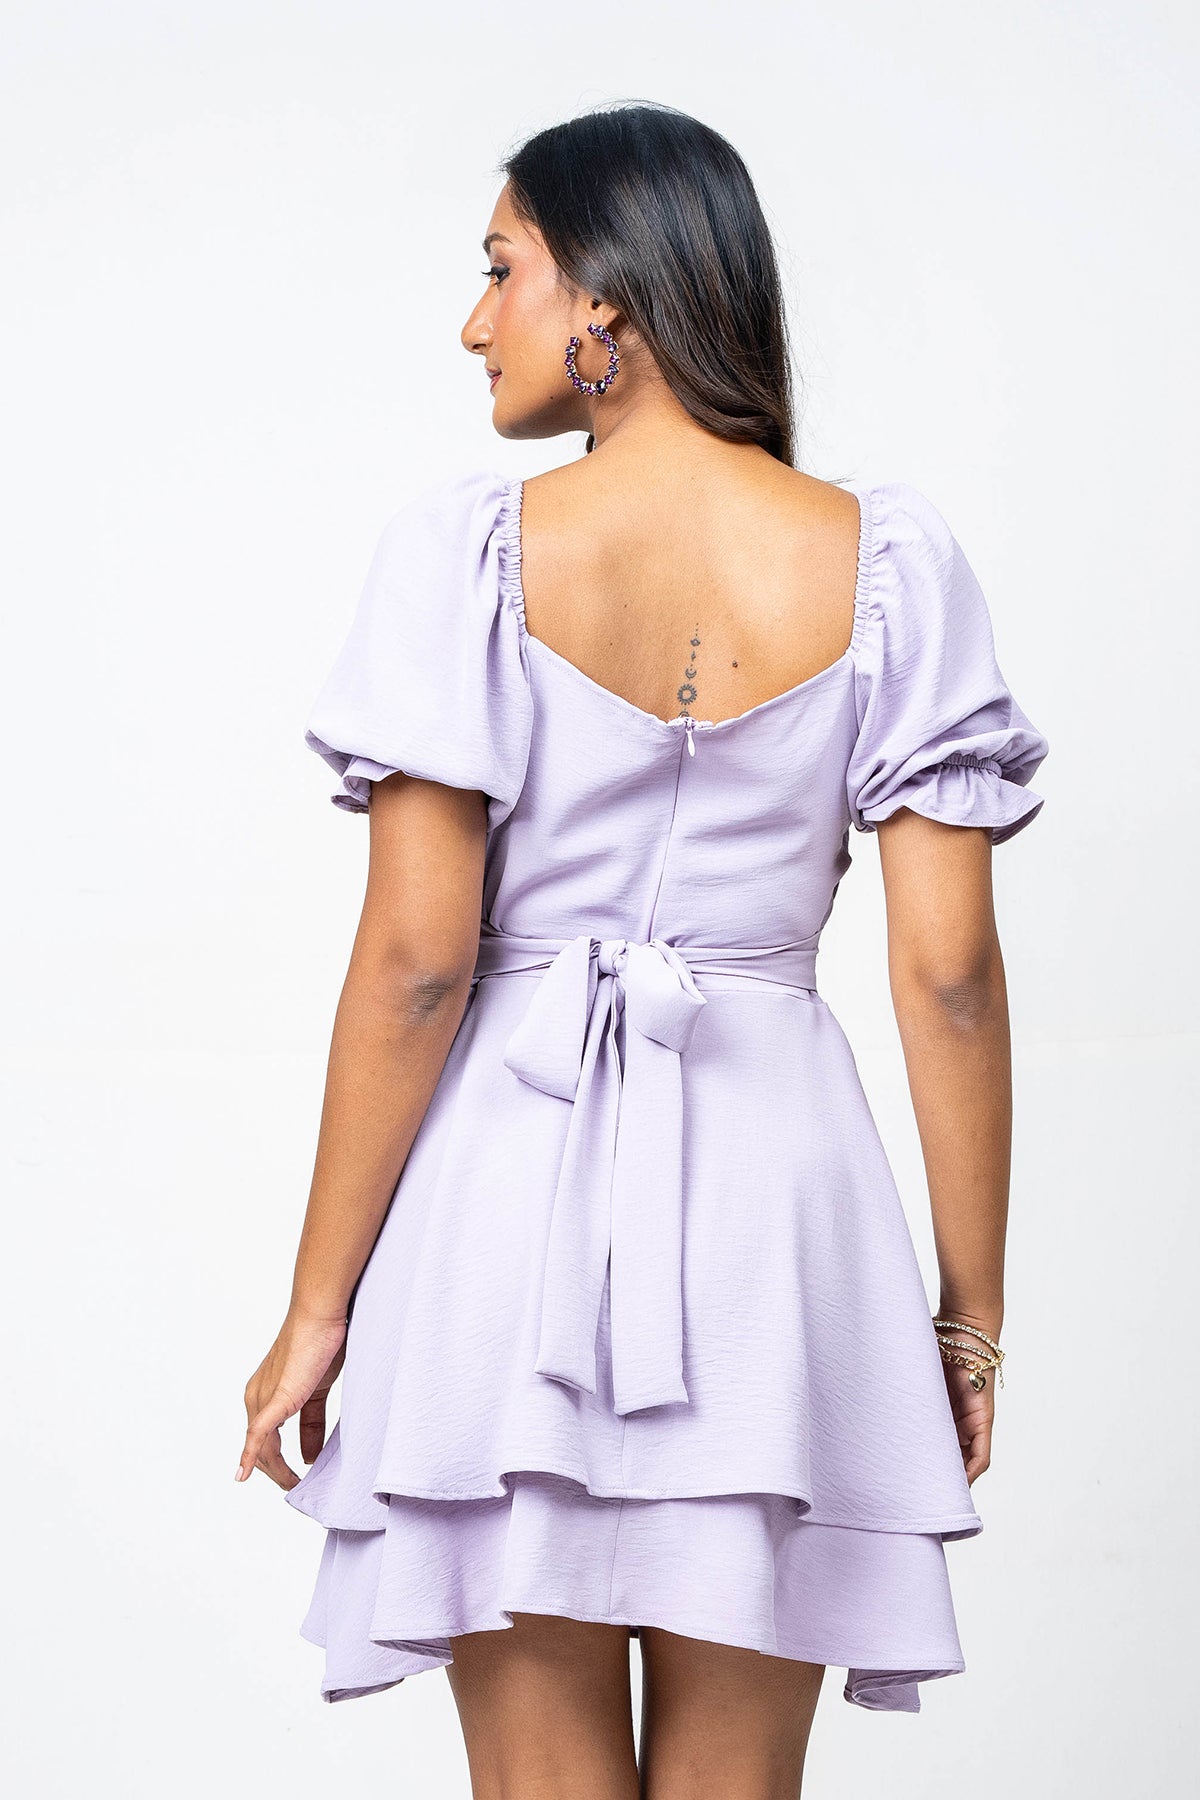 Modano Women's Puff Sleeve Casual Dress